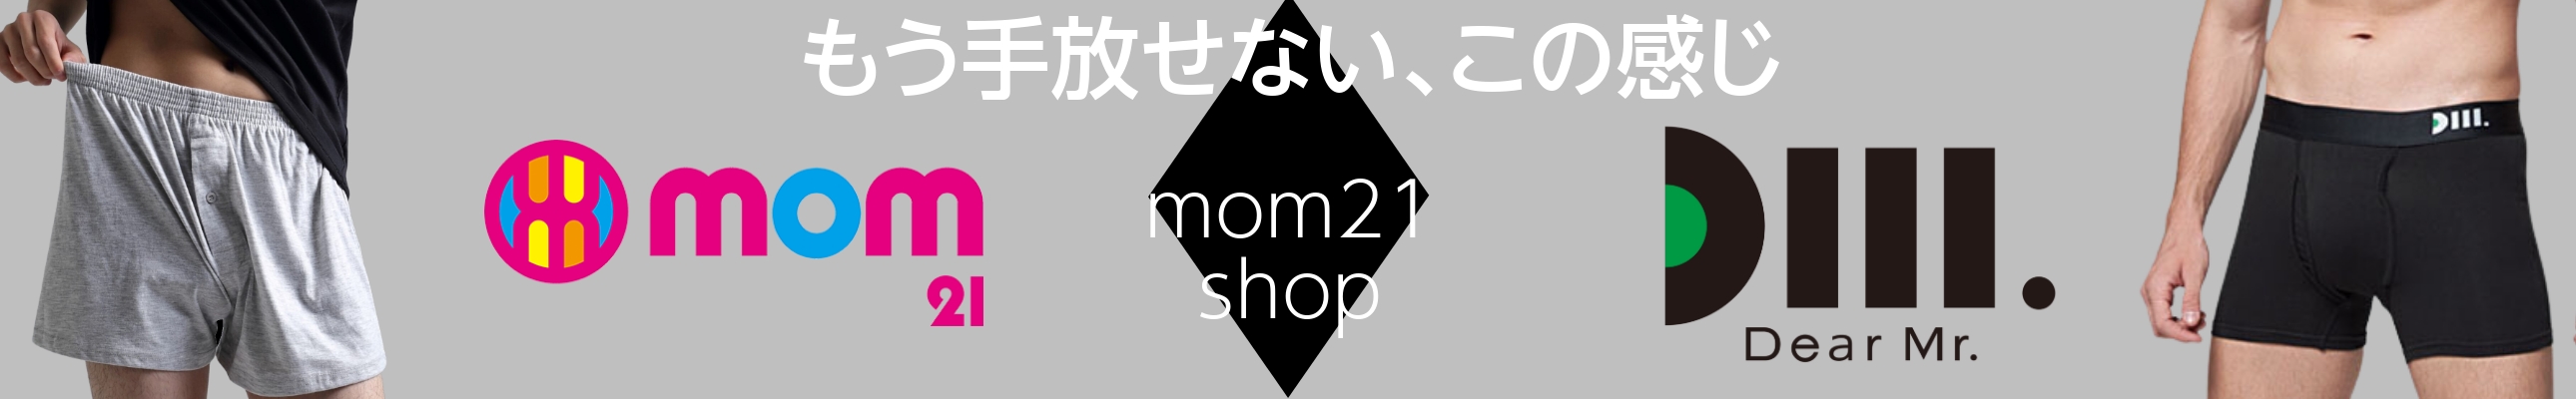 mom21-shop ヘッダー画像